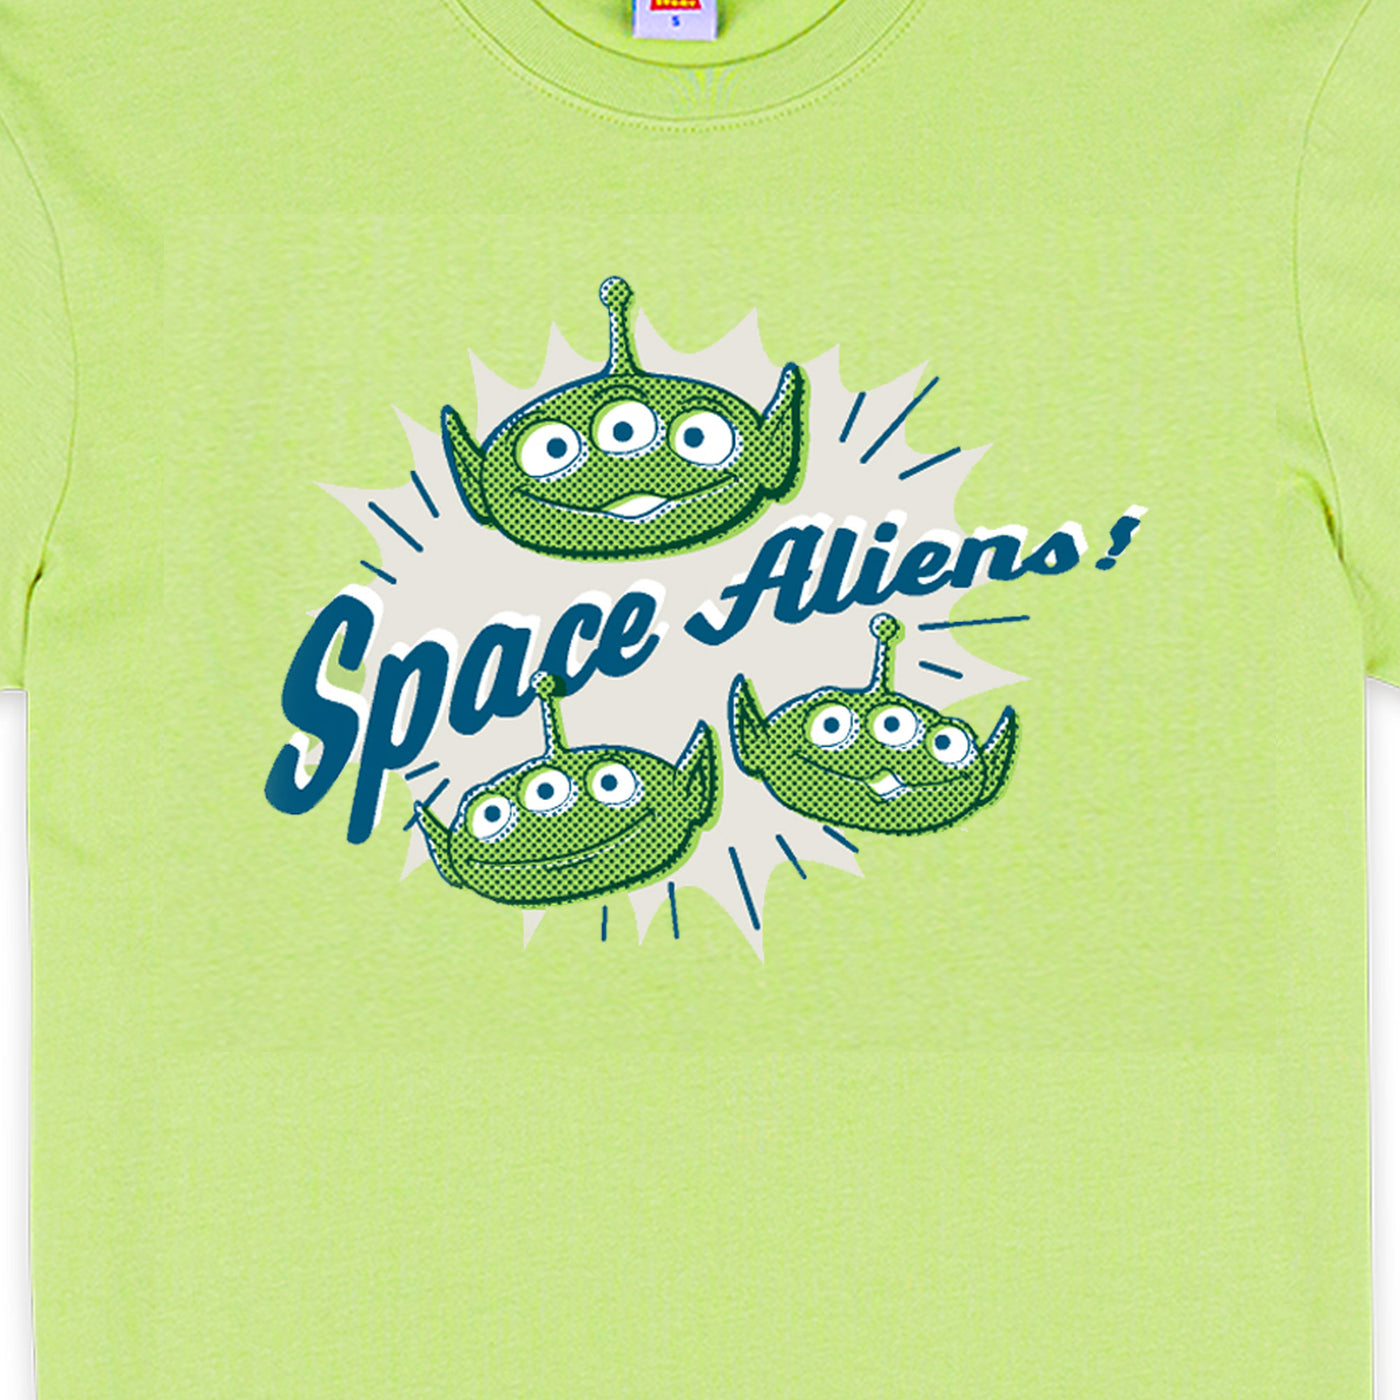 Disney Toy Story Space Aliens! Men T-Shirt & Women Crop - เสื้อยืดดิสนีย์ ทอย สตอรี่ ผู้ชายและครอปผู้หญิง